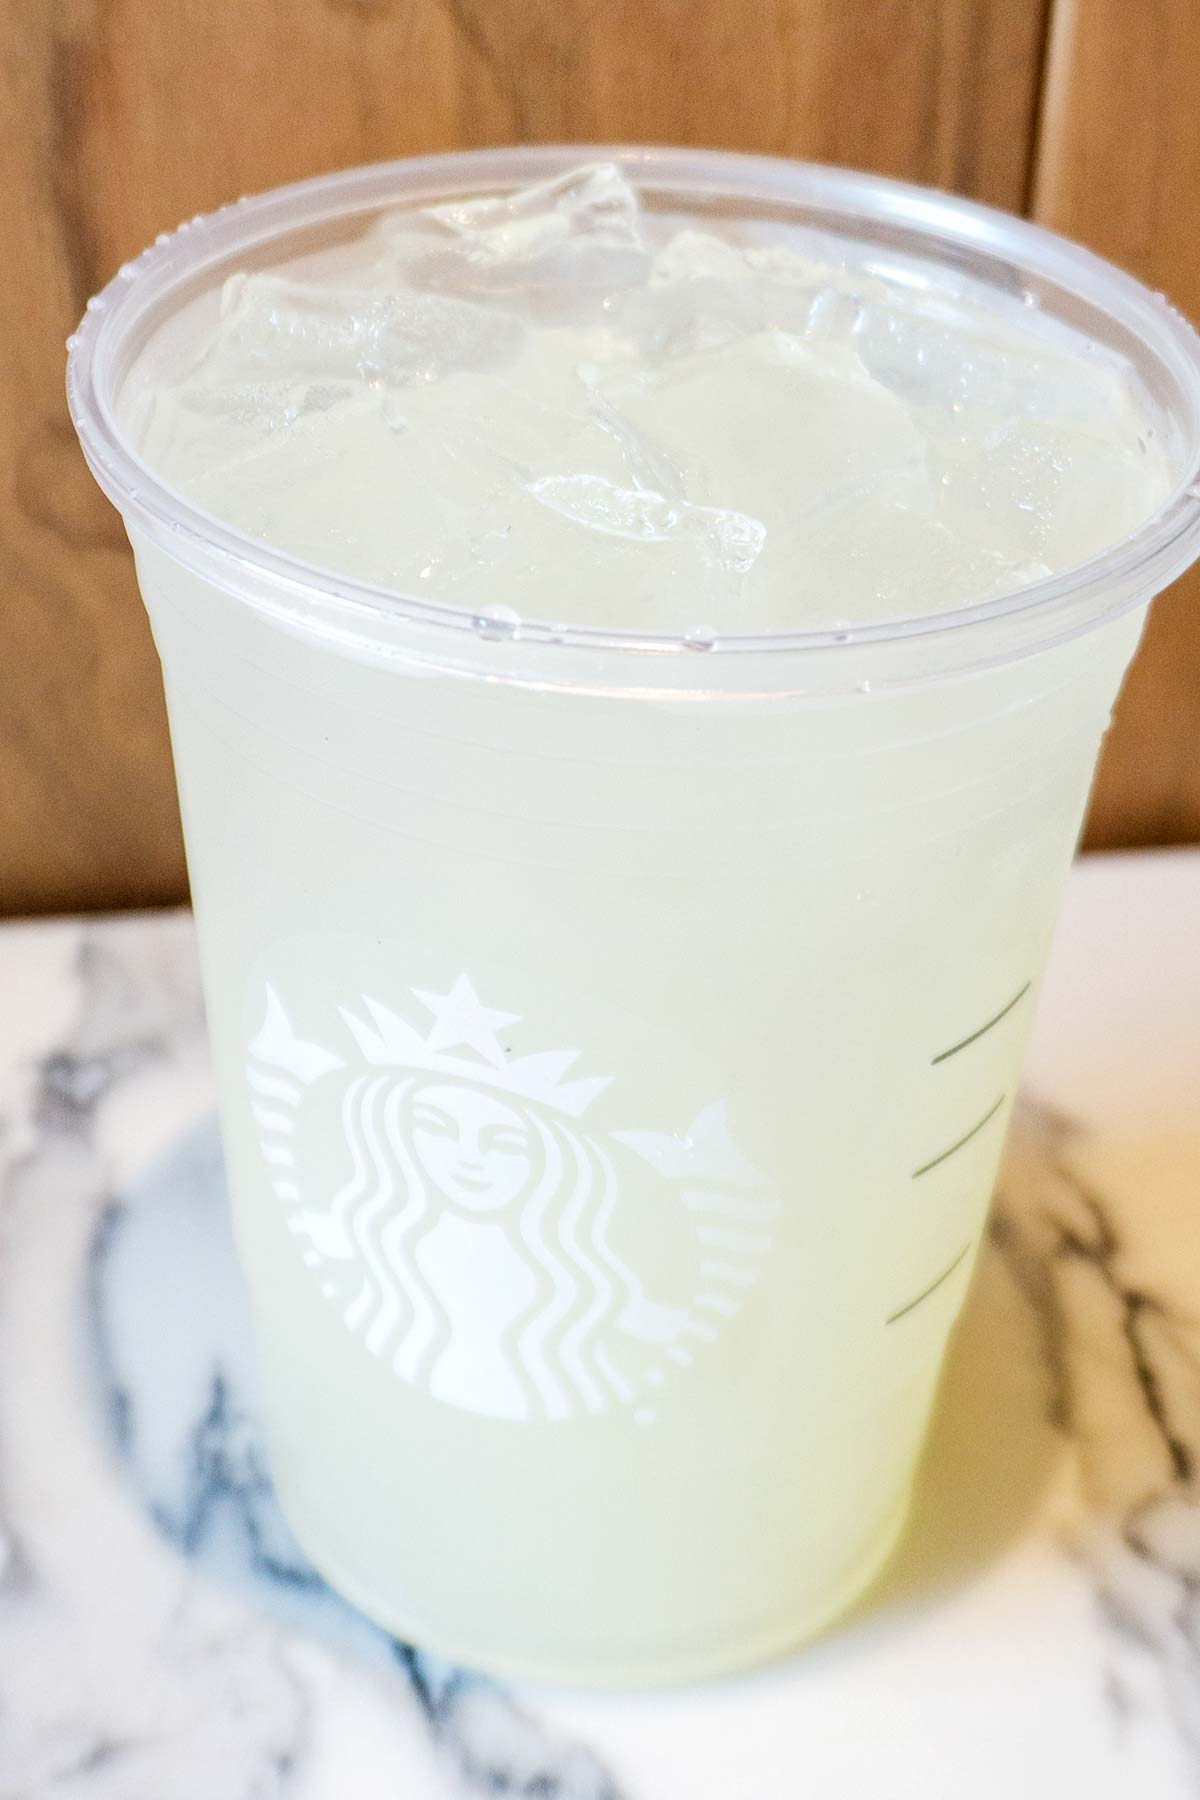 Starbucks Gummy Bear Drink in a cup.